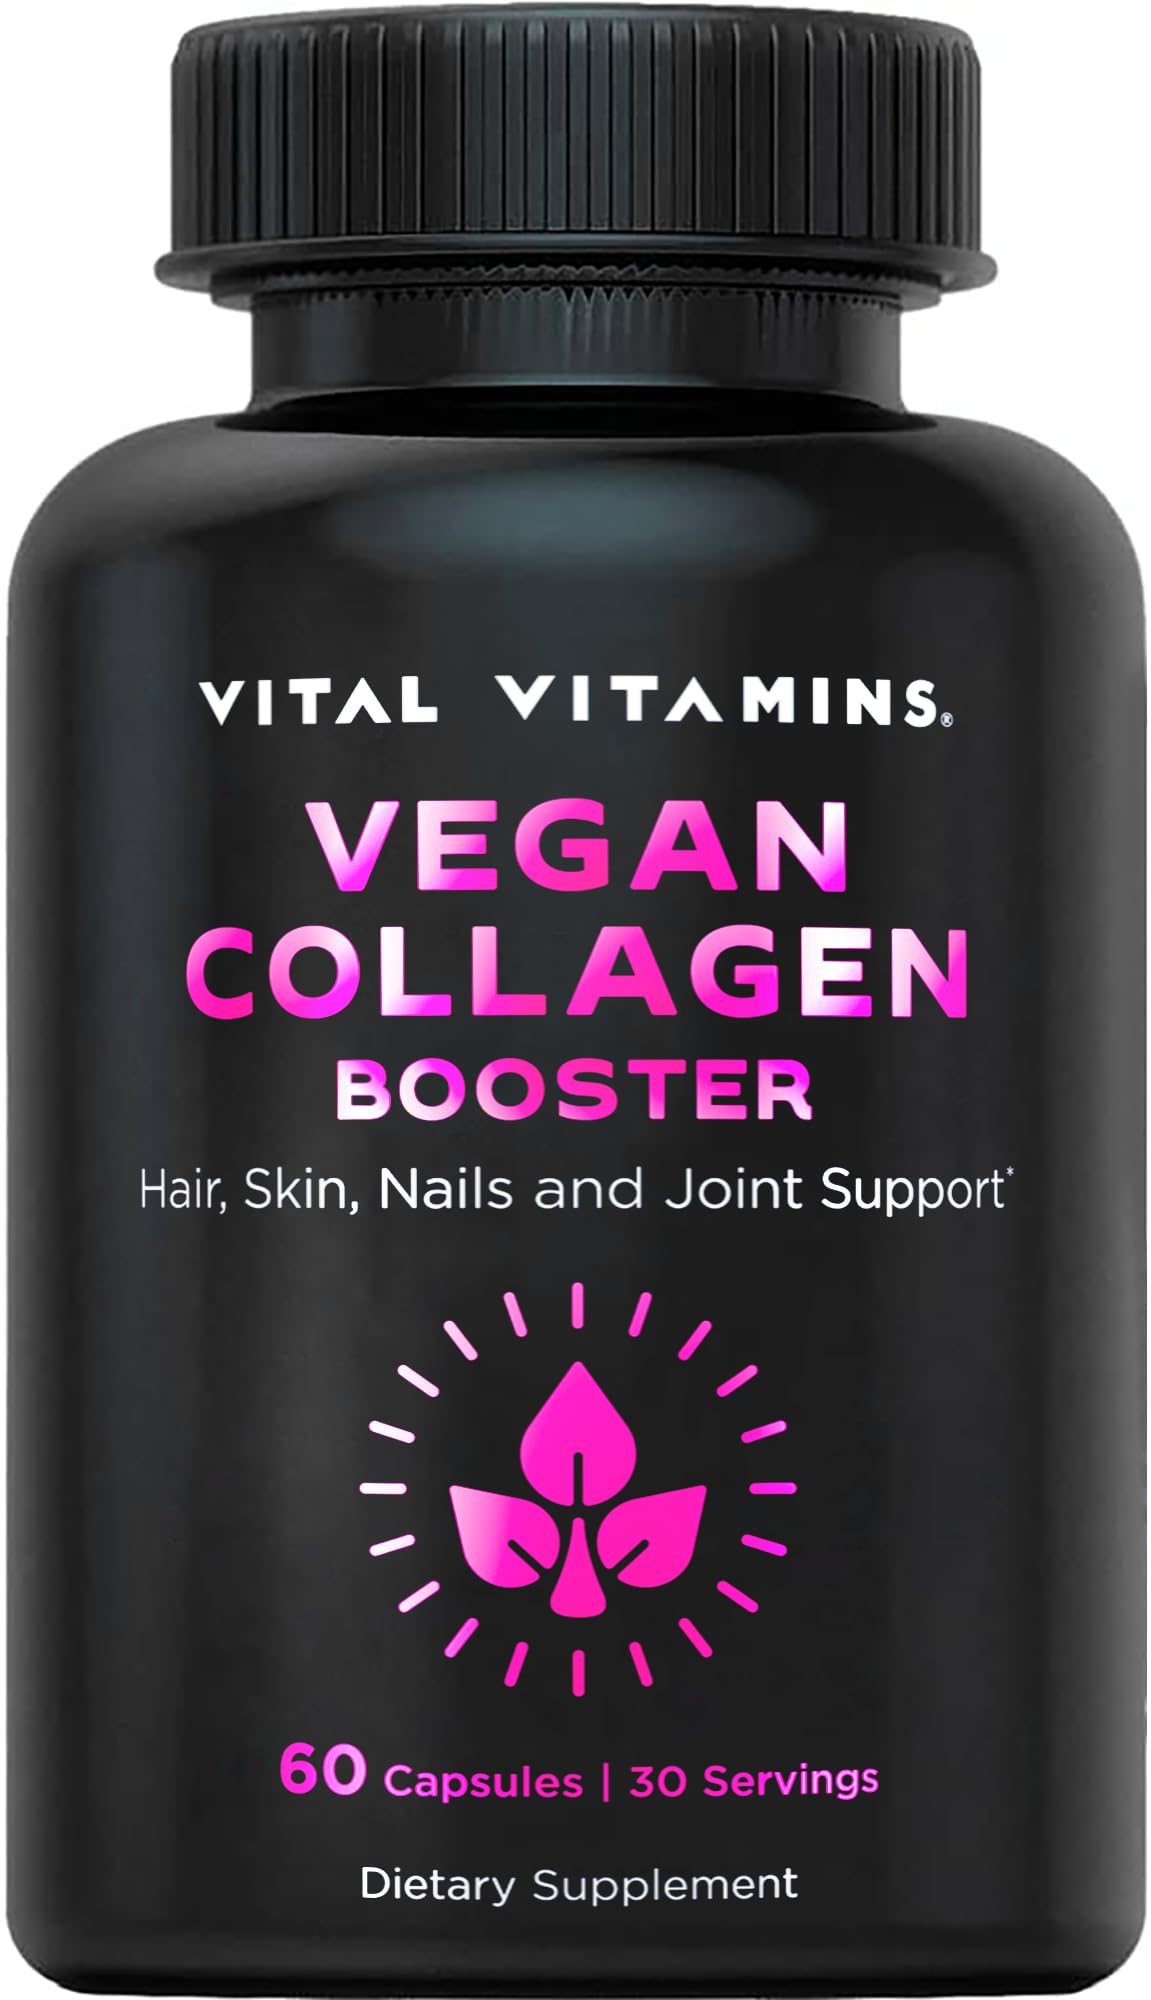 Vital Vitamins Vegan Collagen Booster